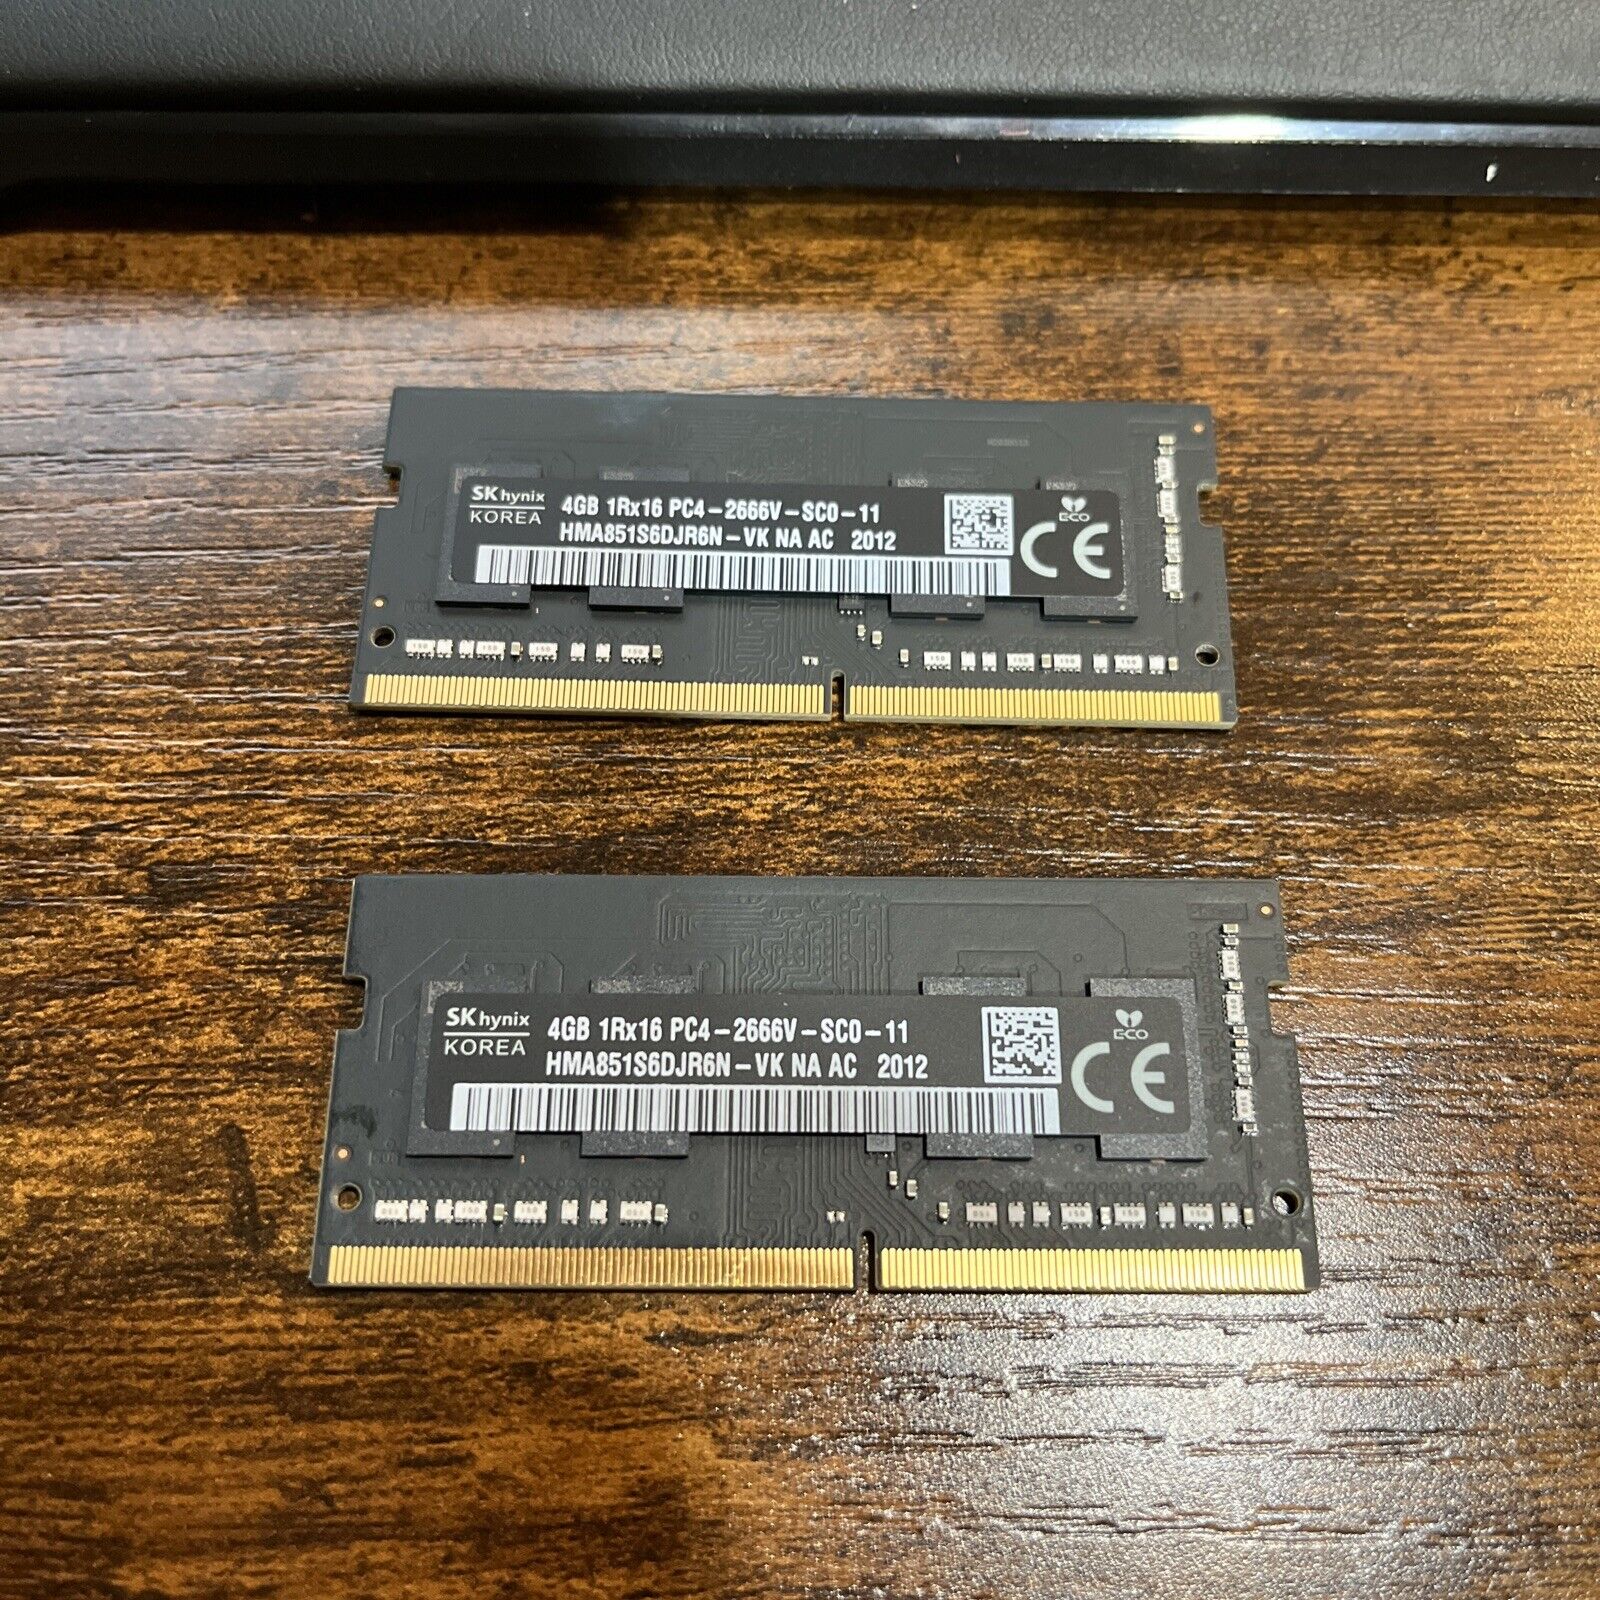 SK Hynix RAM 8gb (2x4gb) 1Rx16 PC4-2666V-SCO-11 for APPLE IMAC Or Laptop NEW